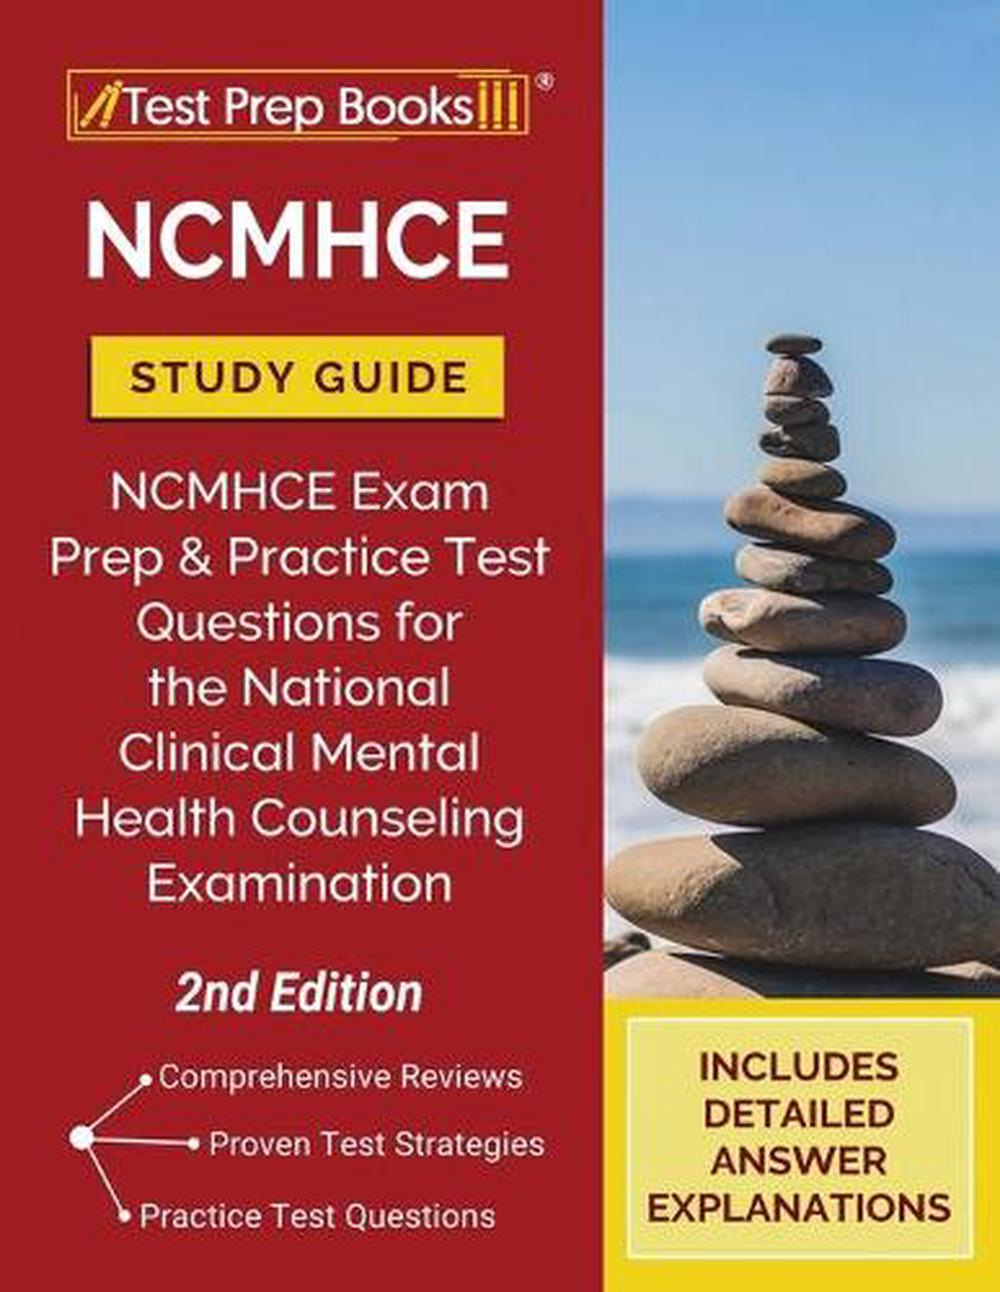 Ncmhce Study Guide by Tpb Publishing Free Shipping! 9781628455991 eBay